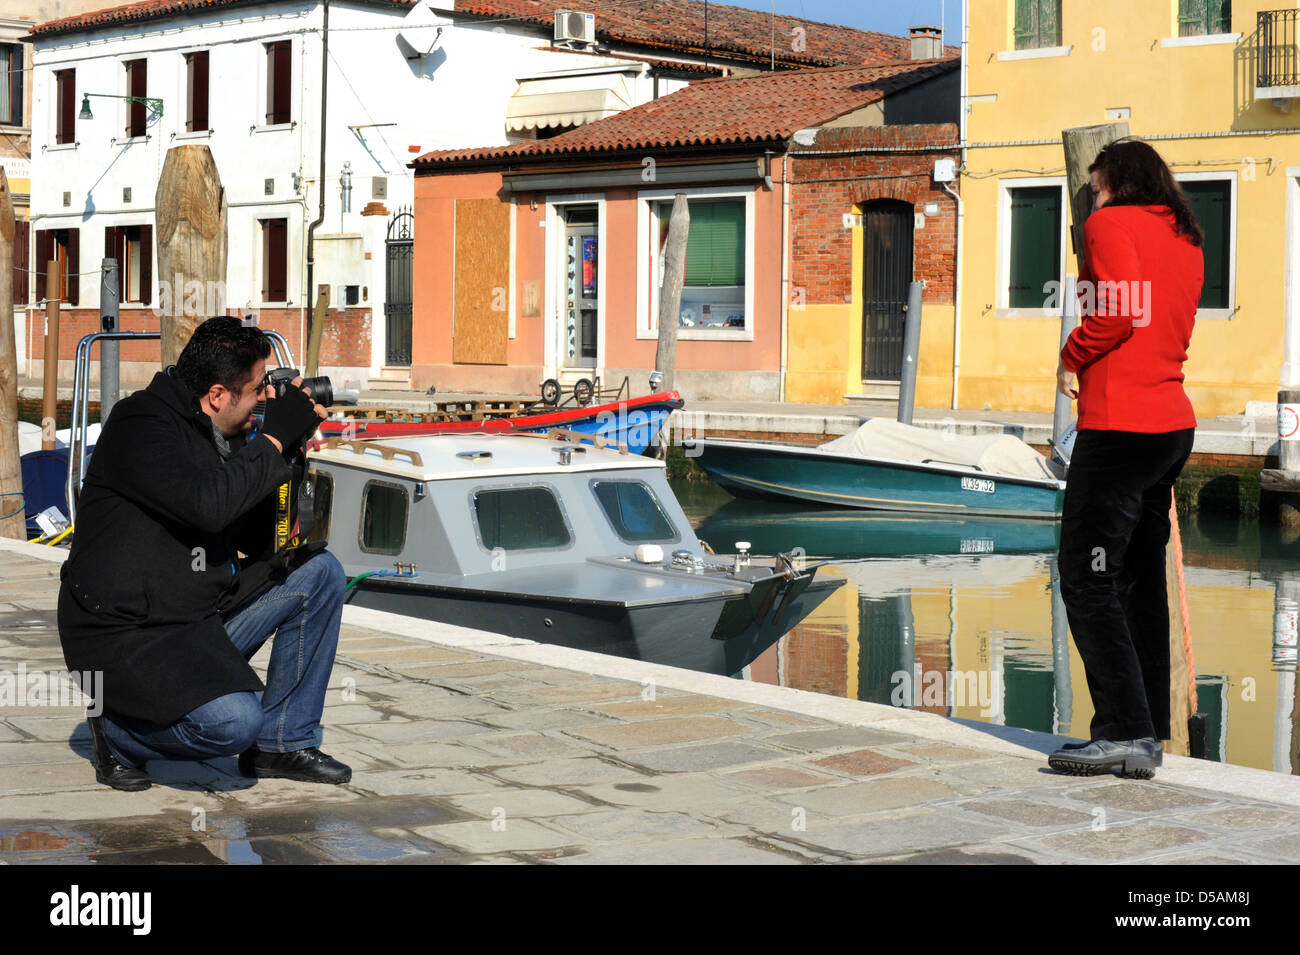 Murano Venetian Island photos de photographie de touristes Banque D'Images